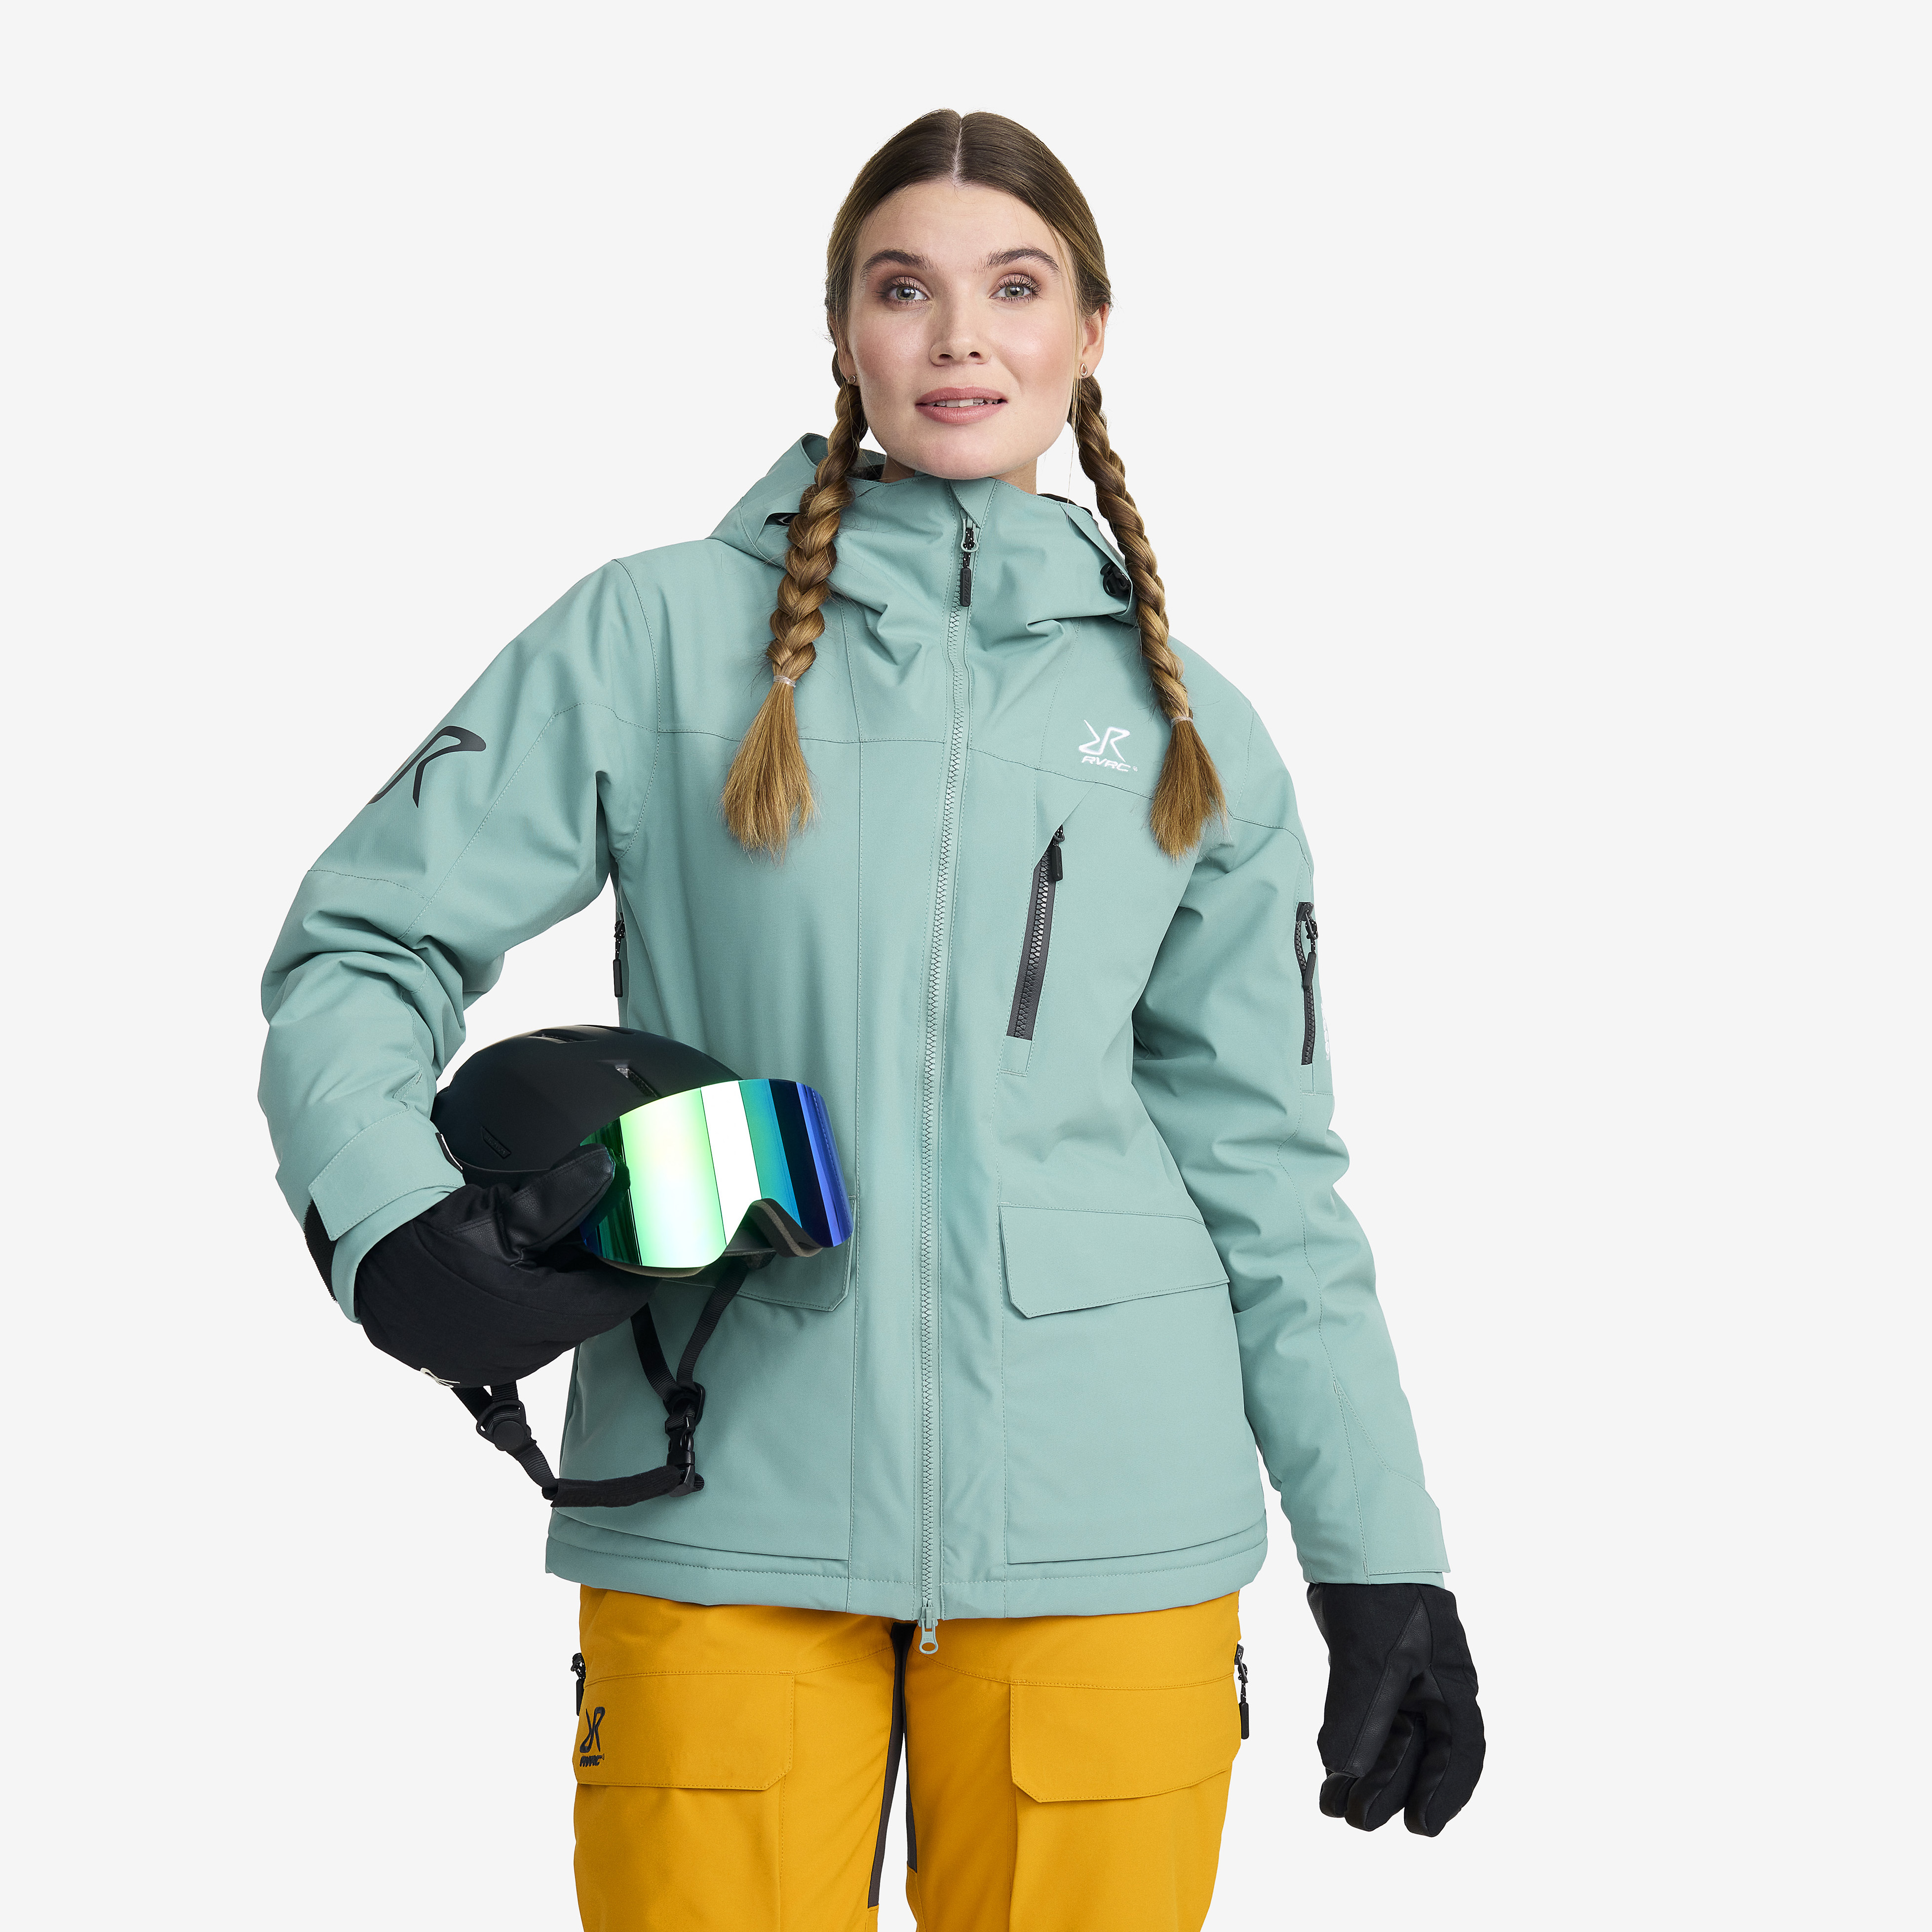 Halo 2L Insulated Ski Jacket Arctic Women